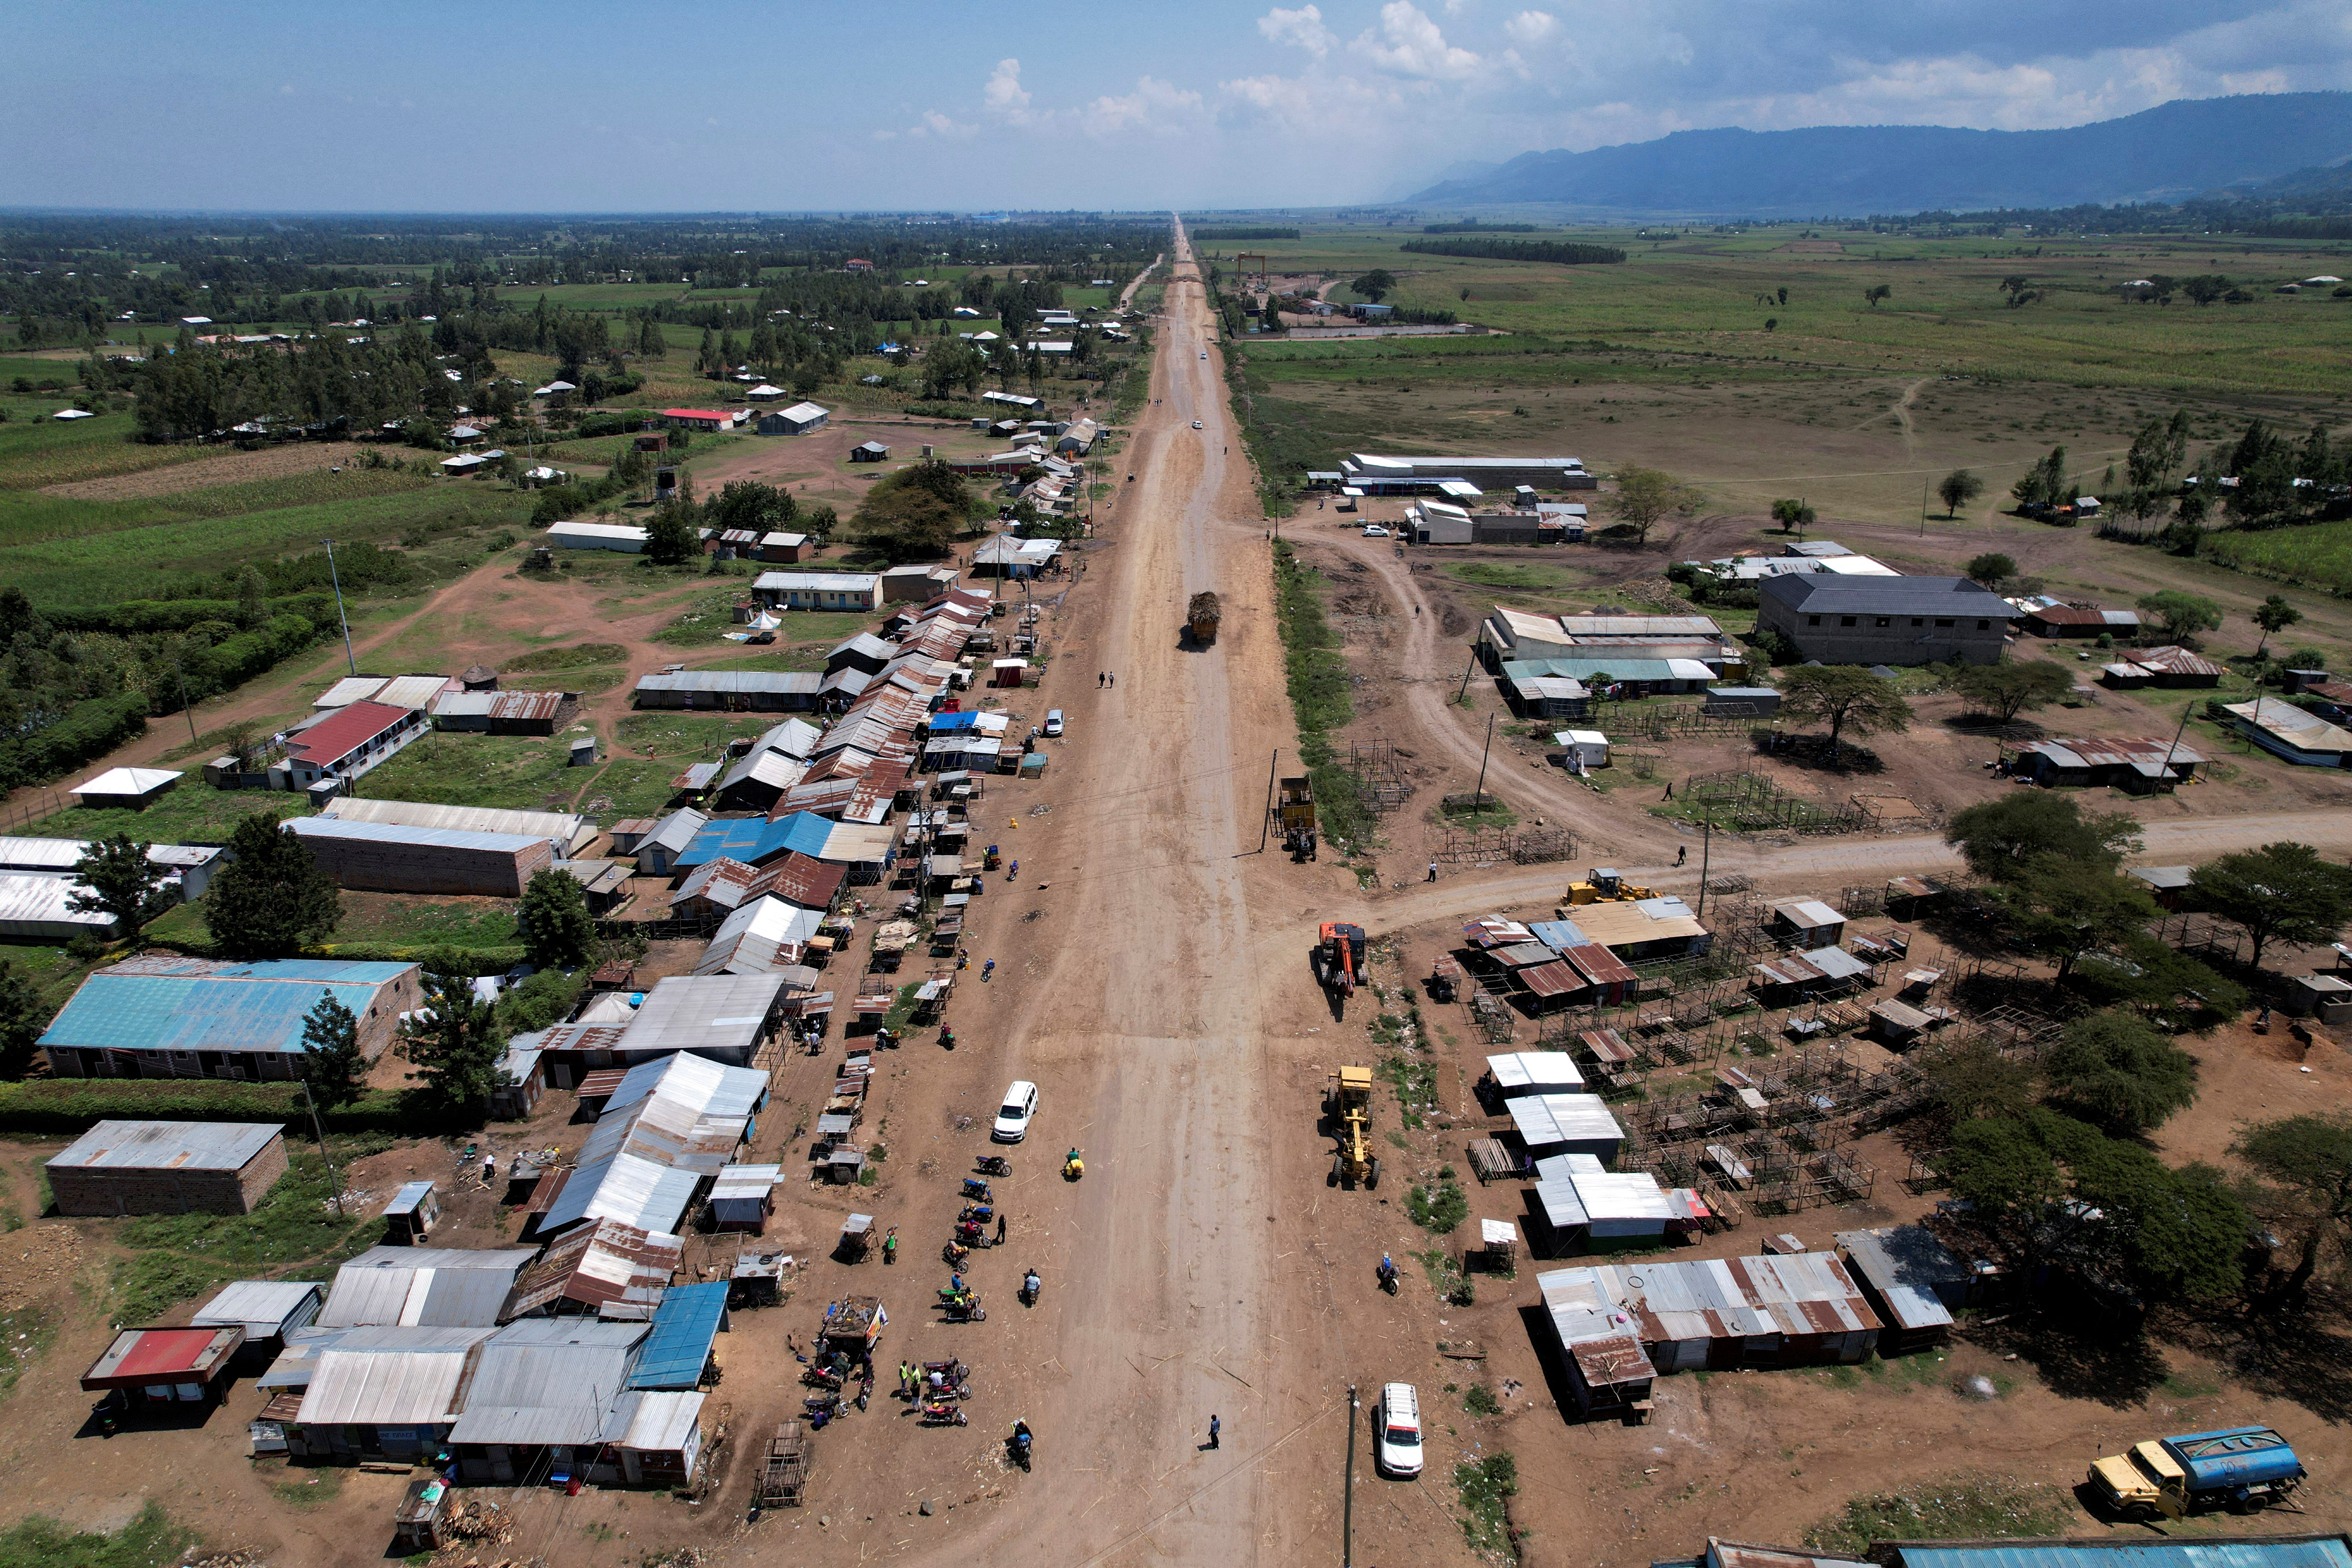 An aerial view shows the towns of Kibigori, Kisumu county and Chemase, Nandi county